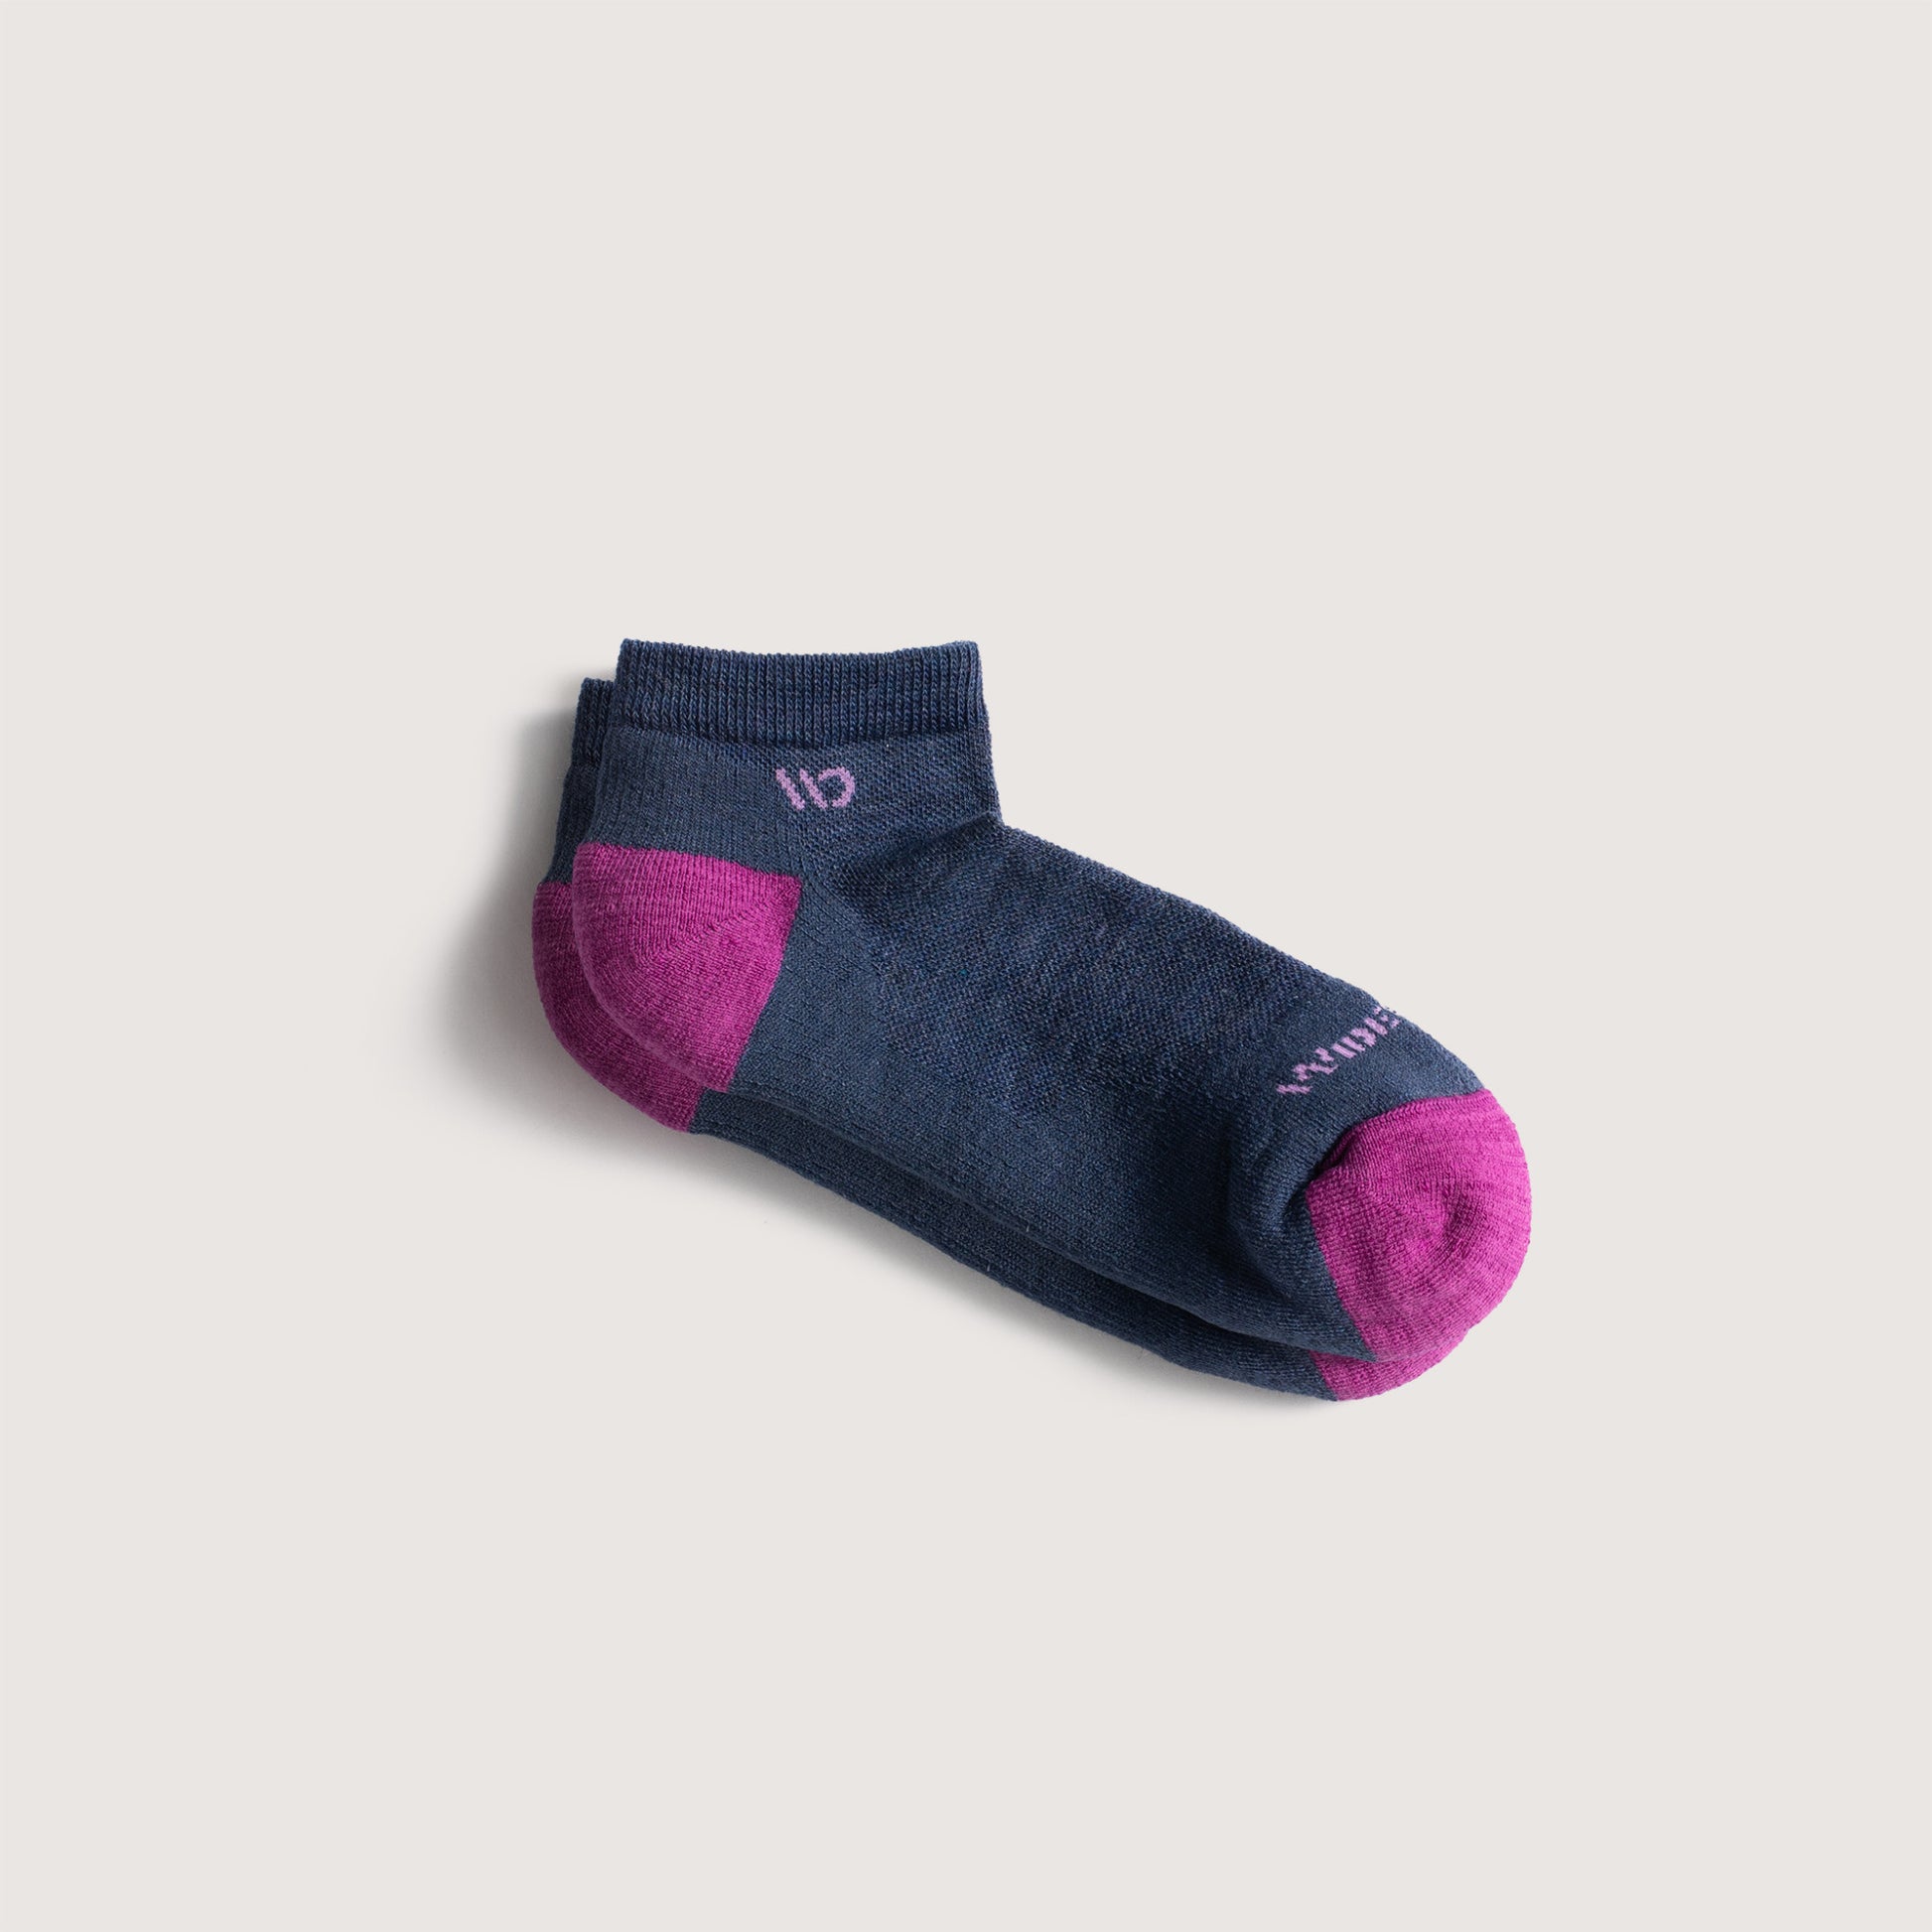 Flat socks featuring fuschia heel/toe, lavender logo, and denim body --Denim